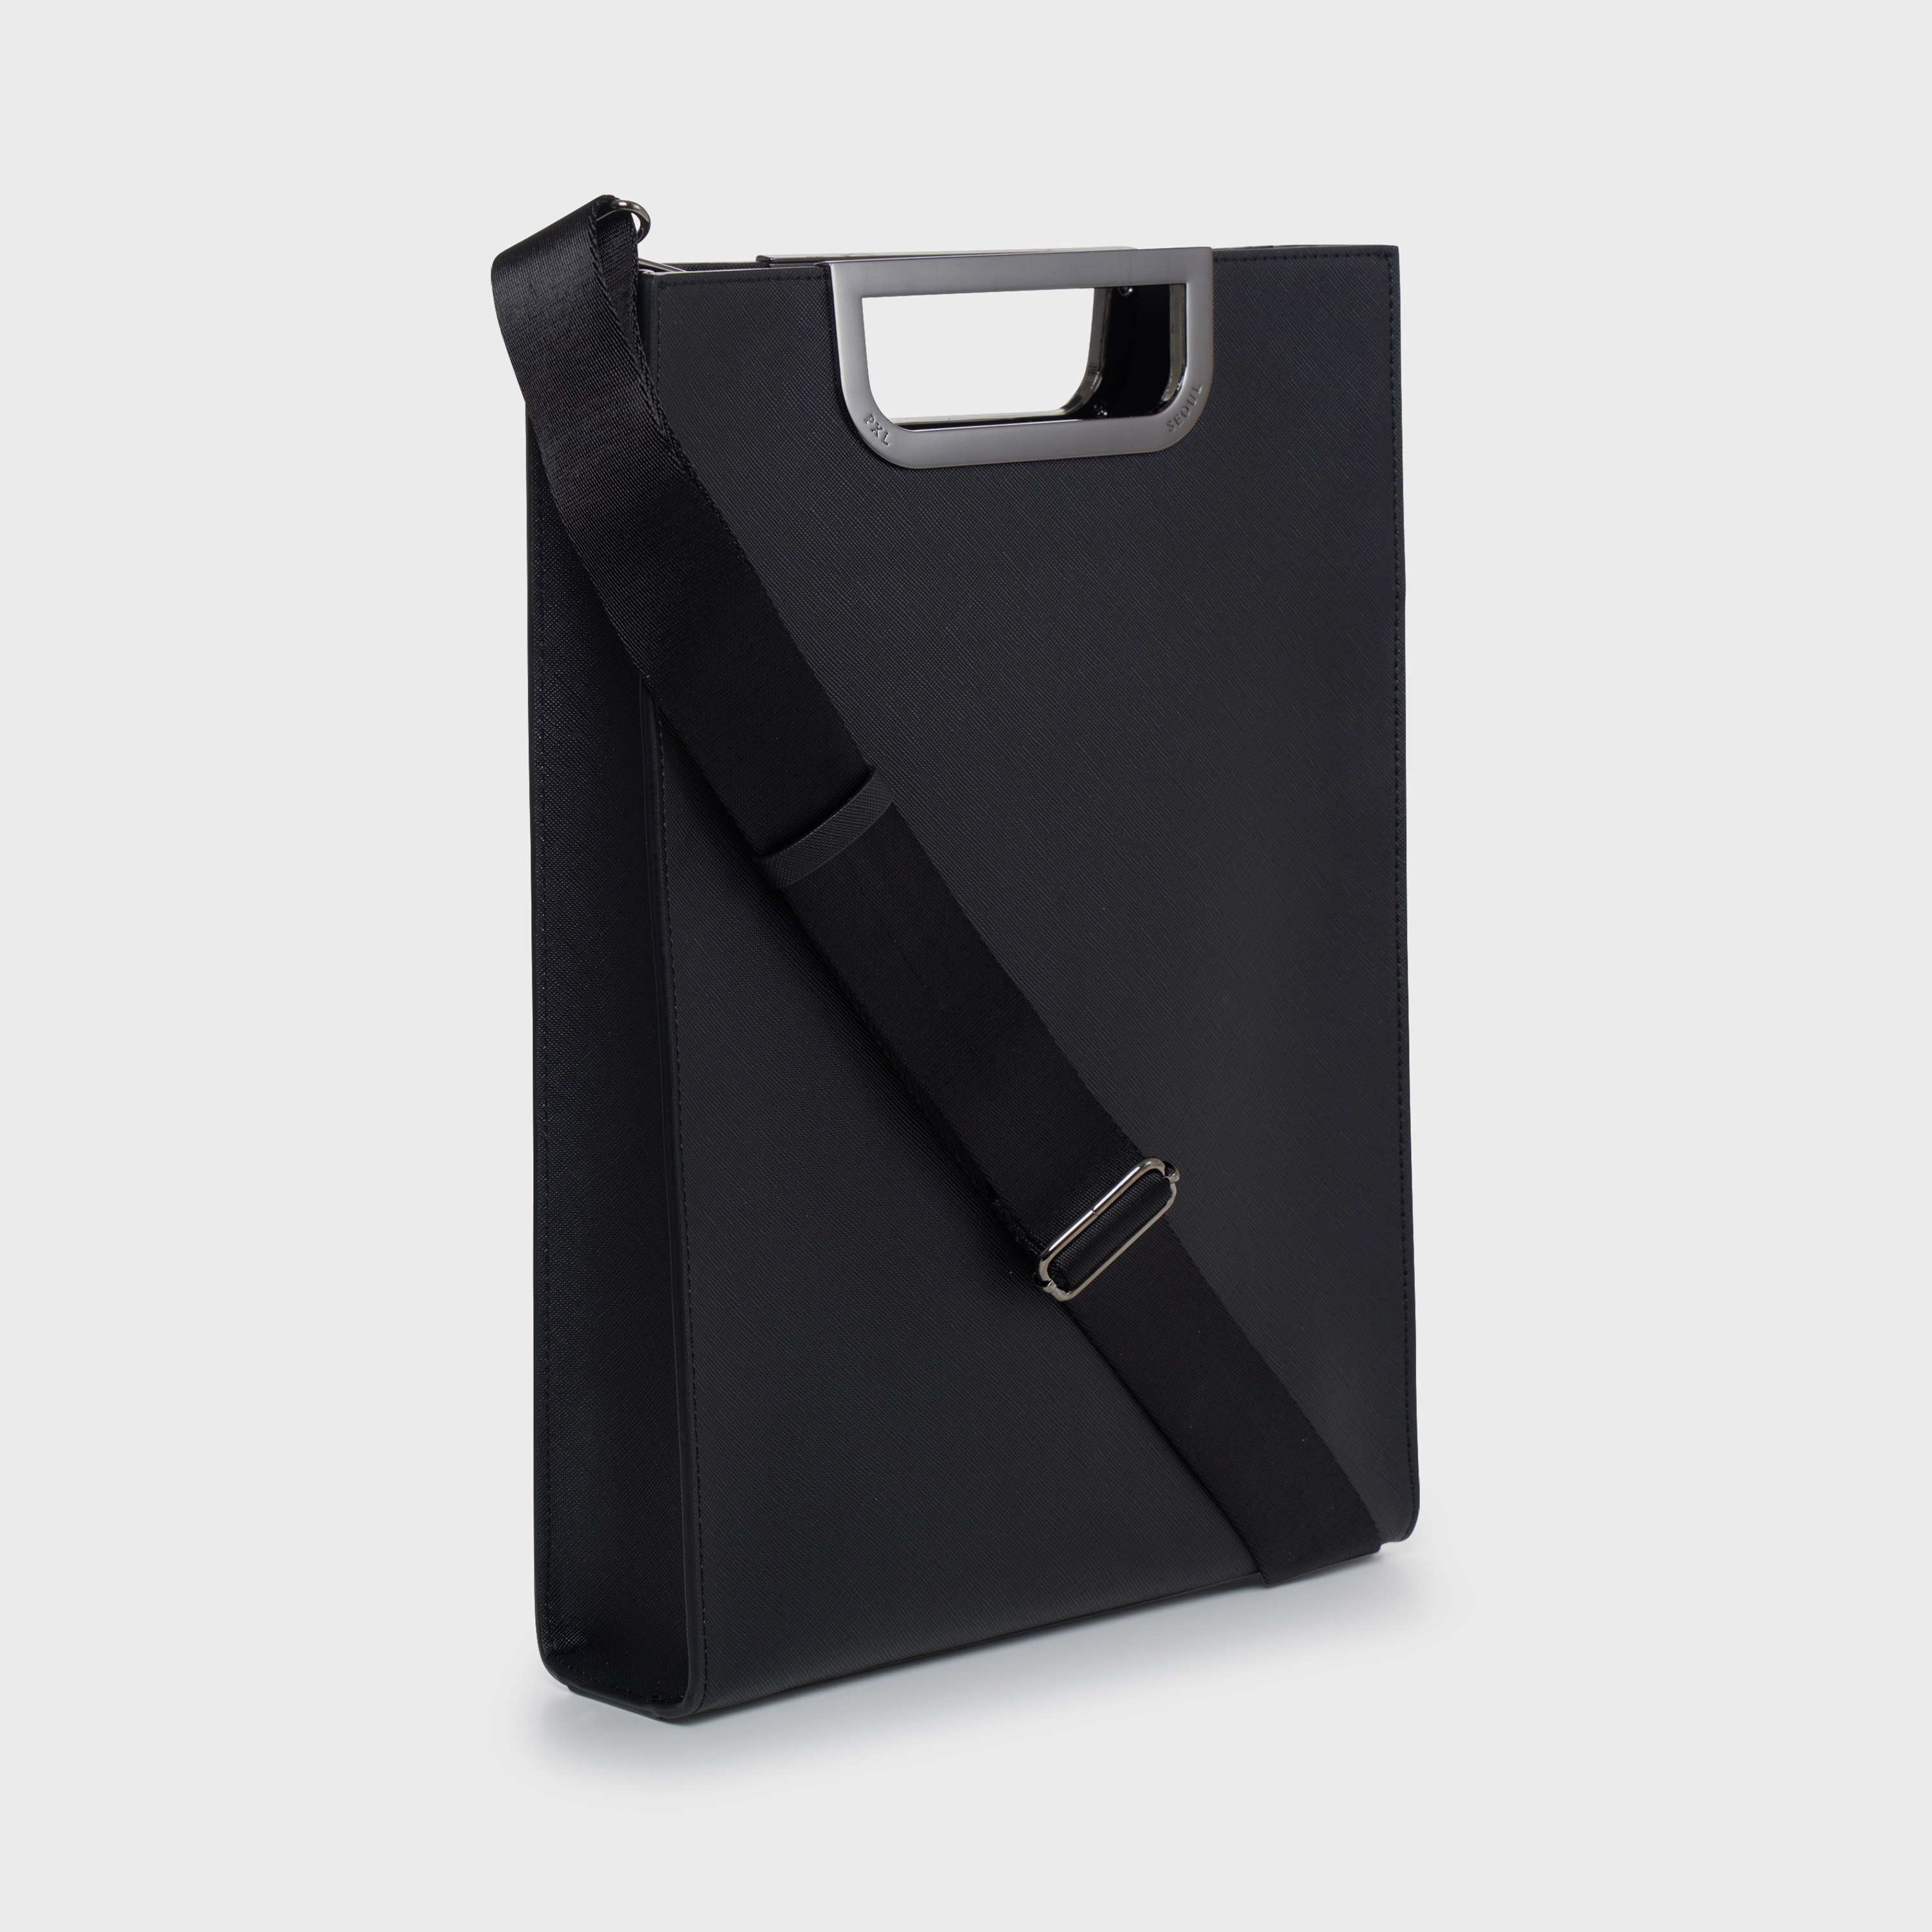 Metalgrip slim briefcase (Black/Onyx)